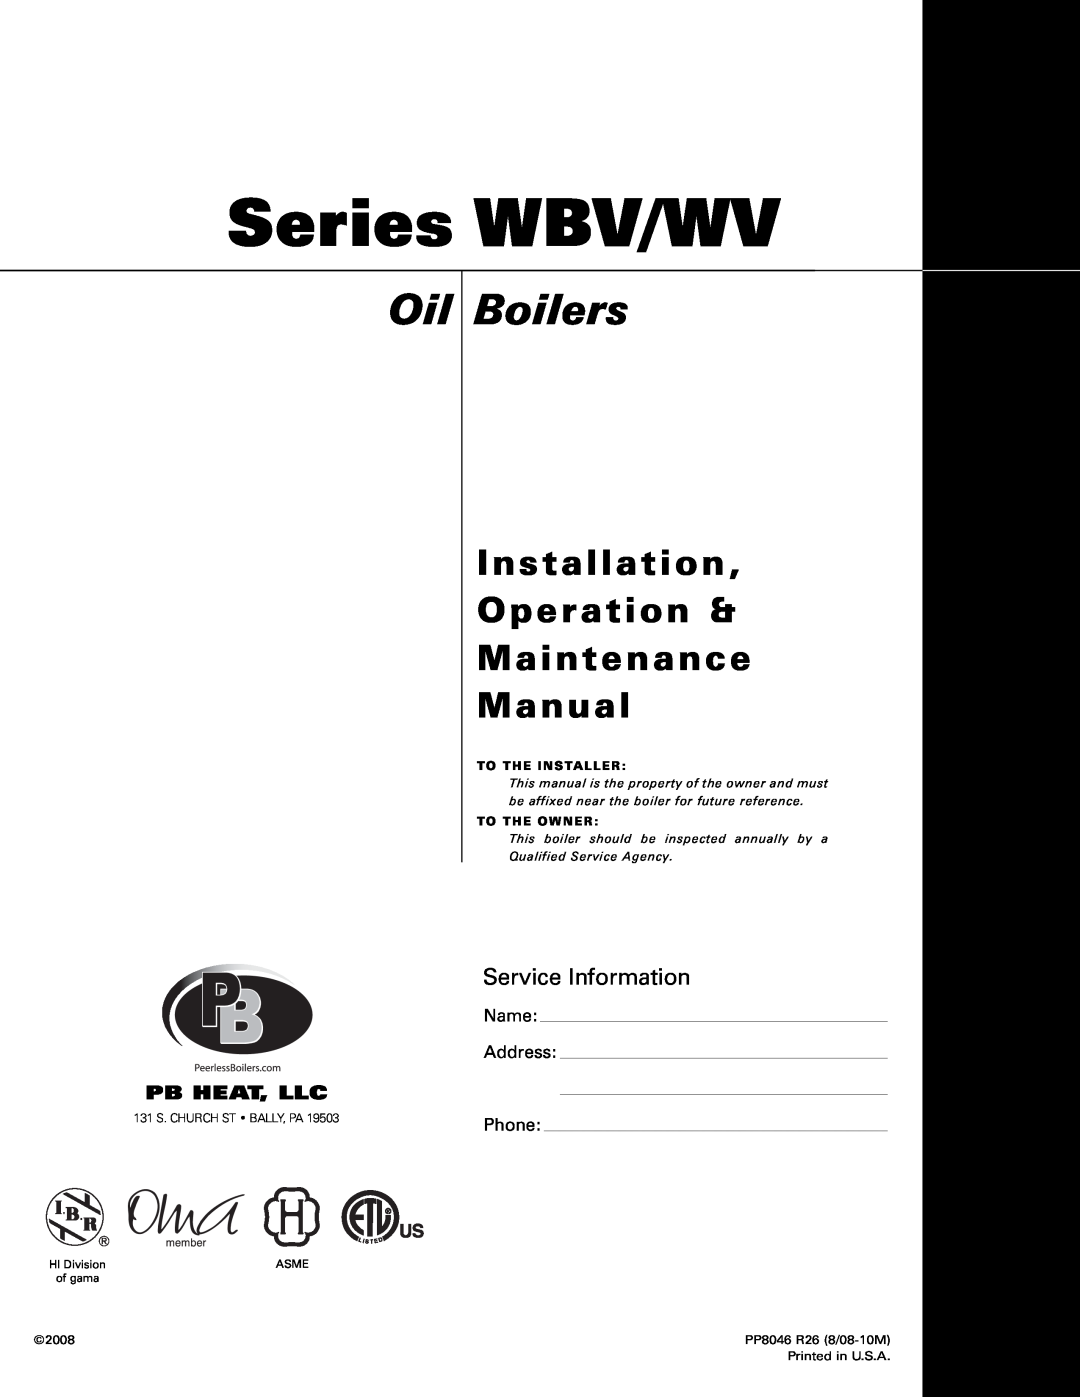 PB Heat WV Series Series WBV/WV, Oil Boilers, Installation Operation & Maintenance Manual, Service Information, Name, Asme 